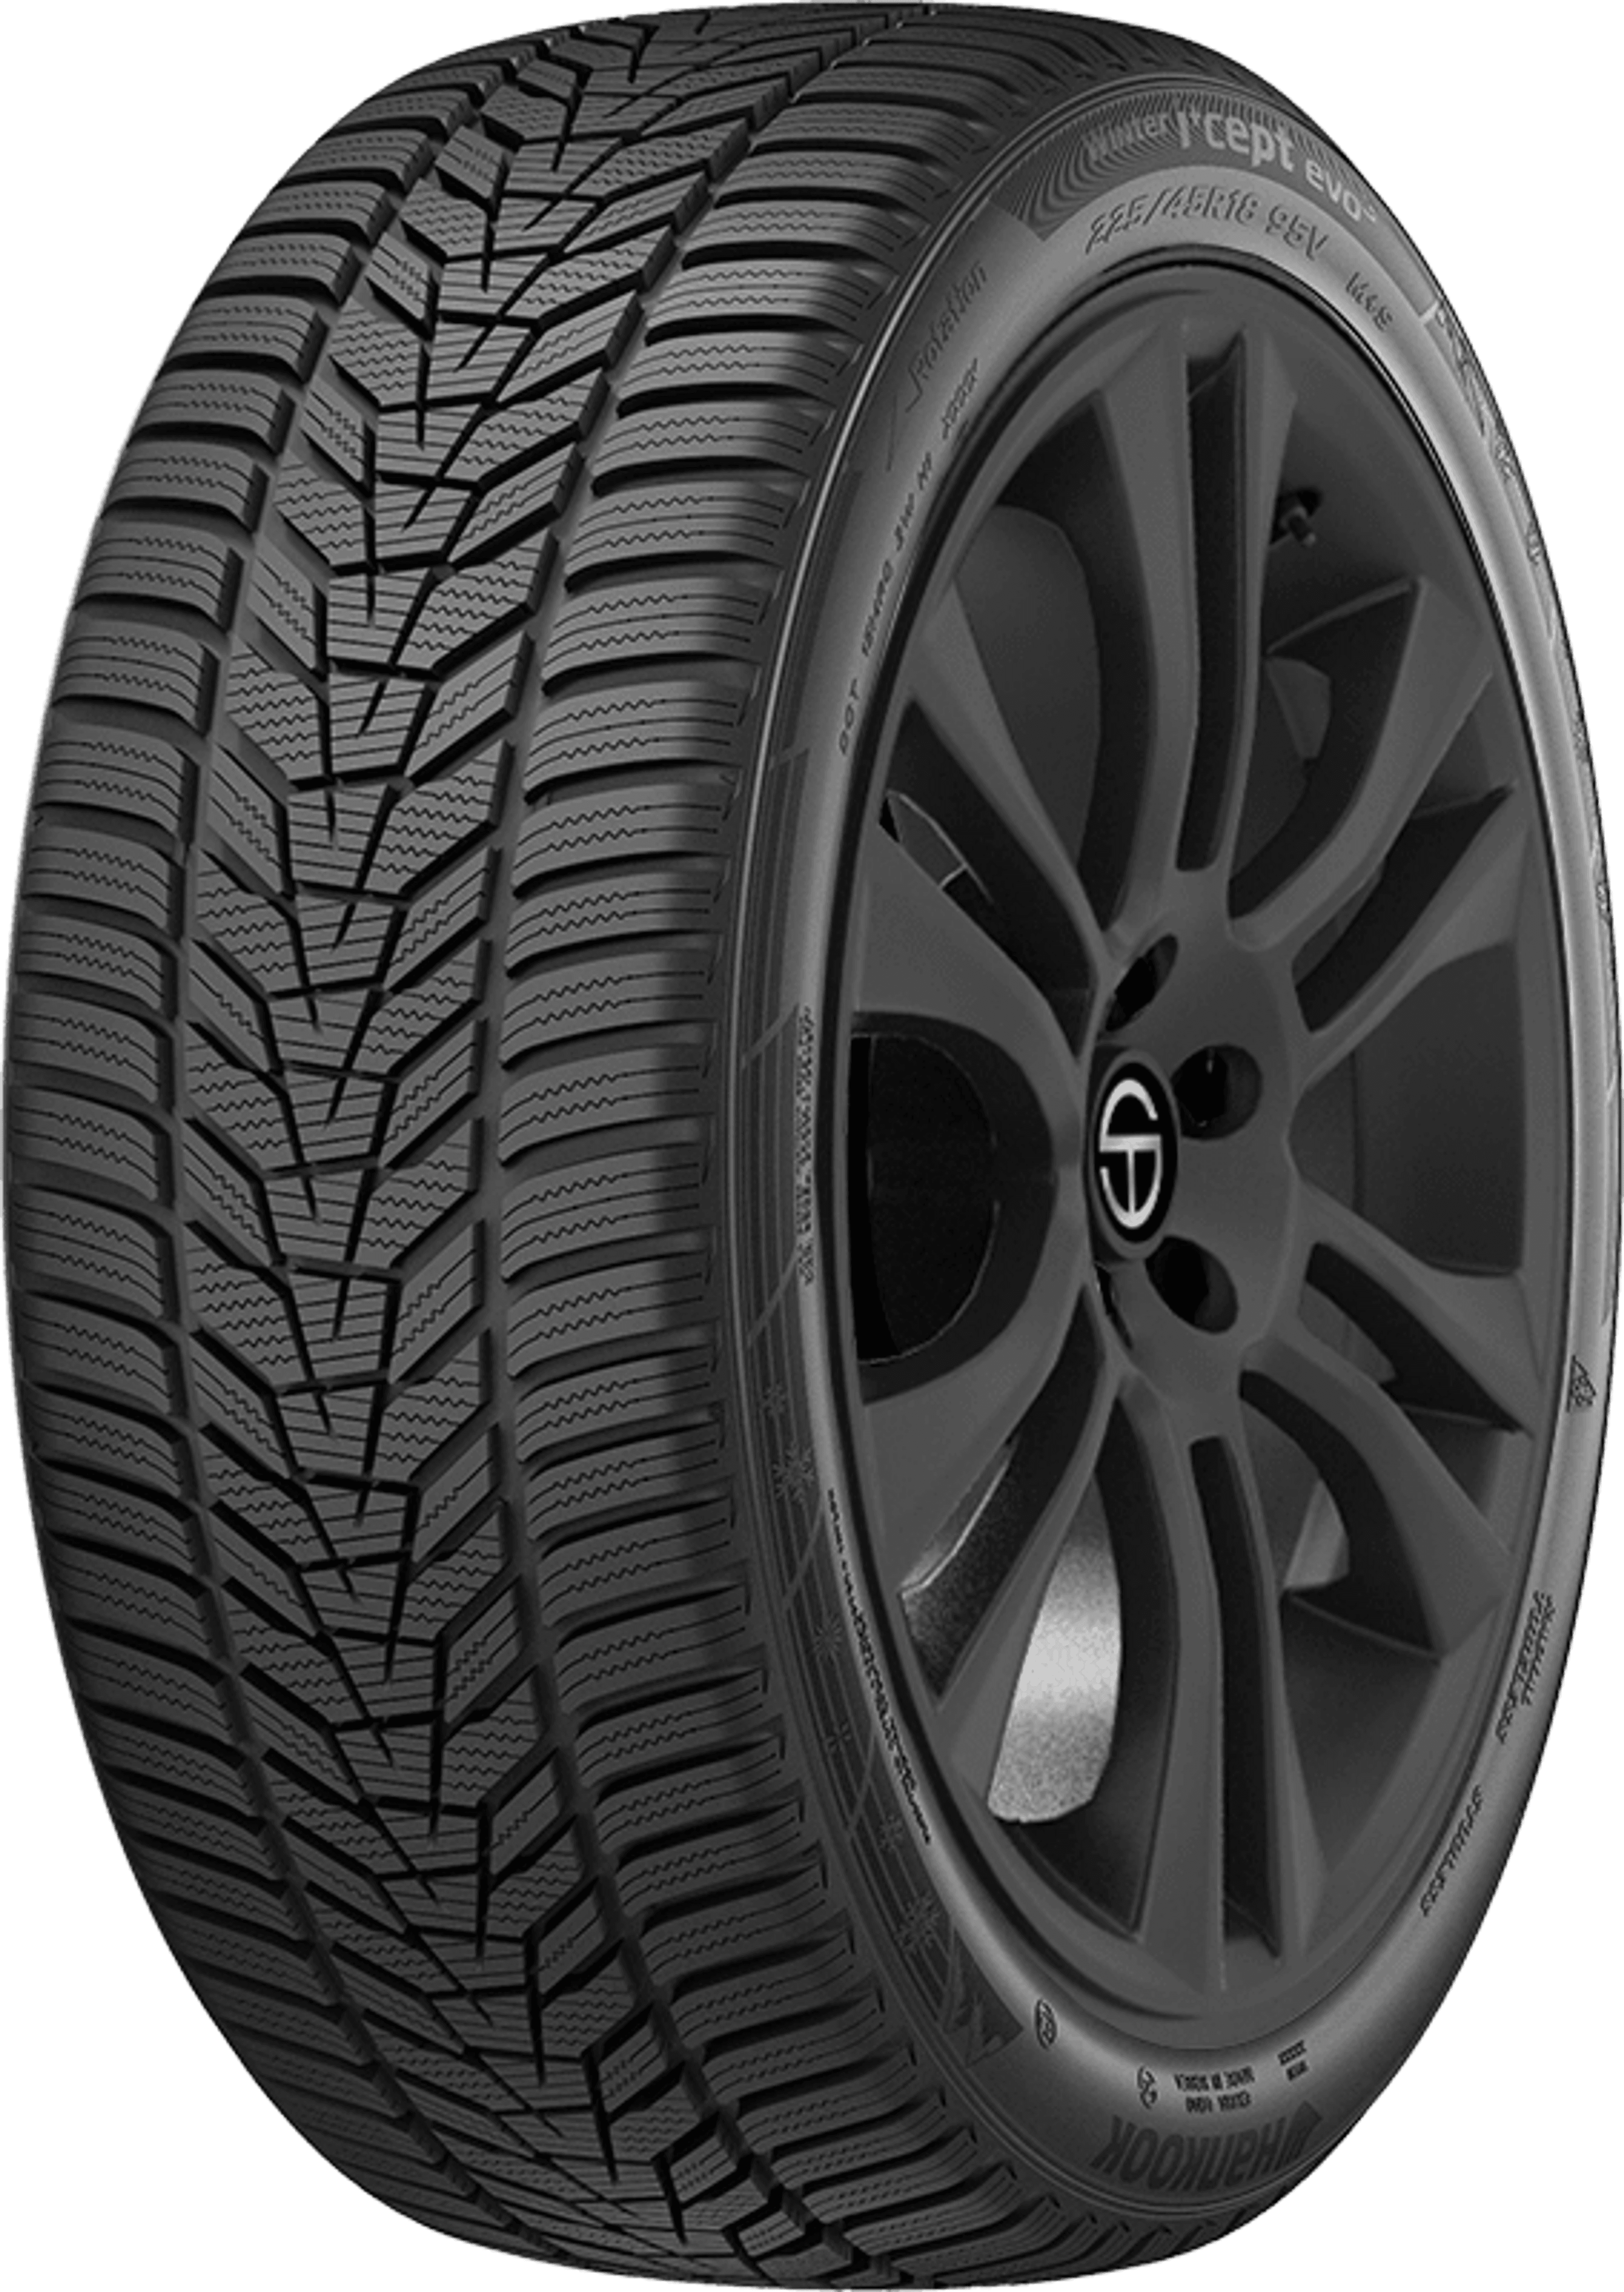 Buy Hankook Winter i*cept evo3 (W330) Tires Online | SimpleTire